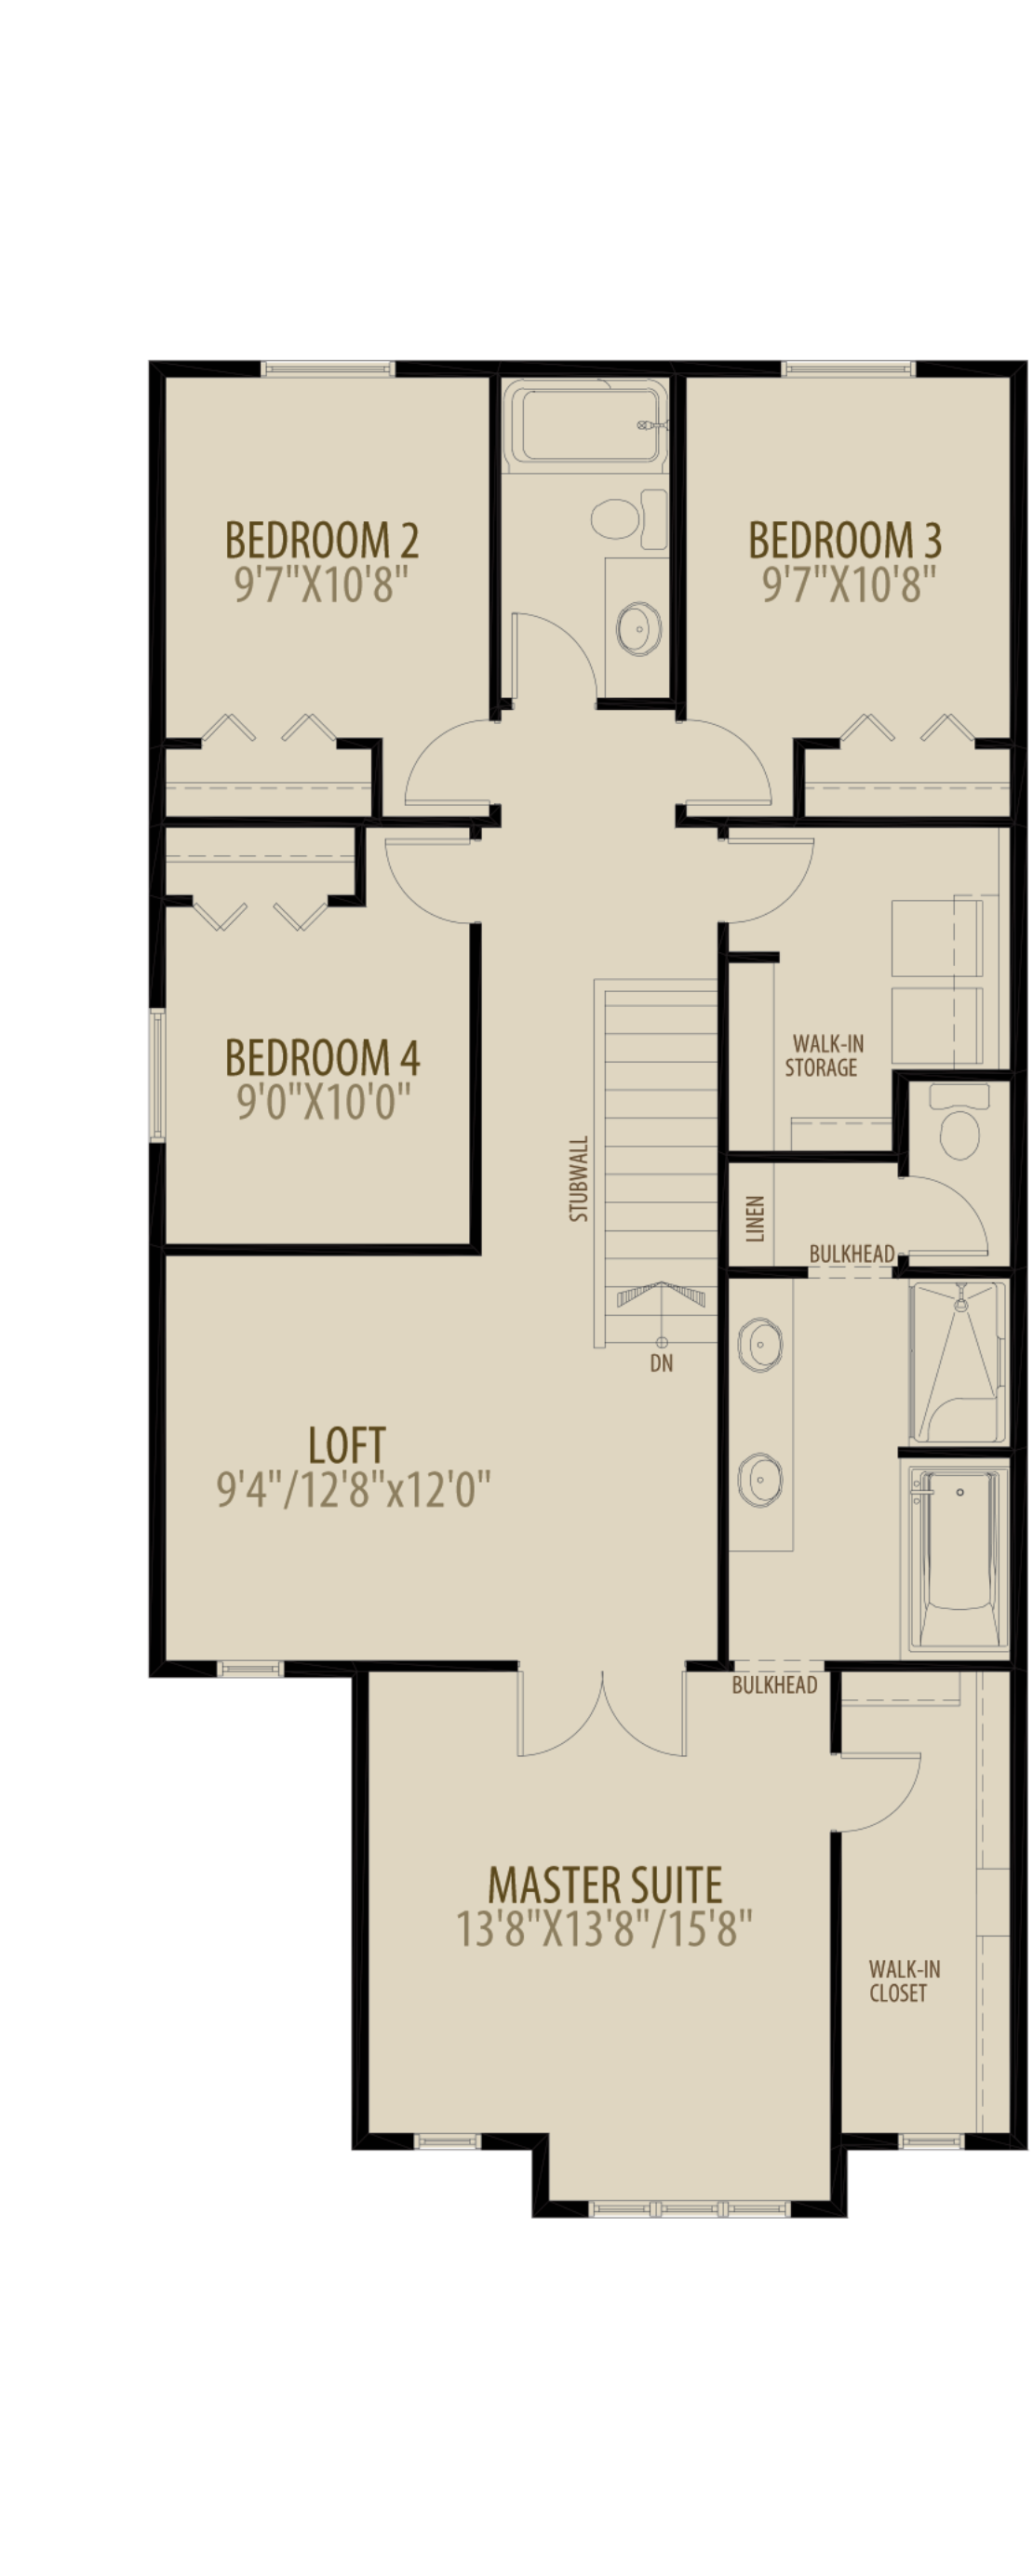 Revised Upper Floor 3 w 4th Bedroom adds 50 sq ft